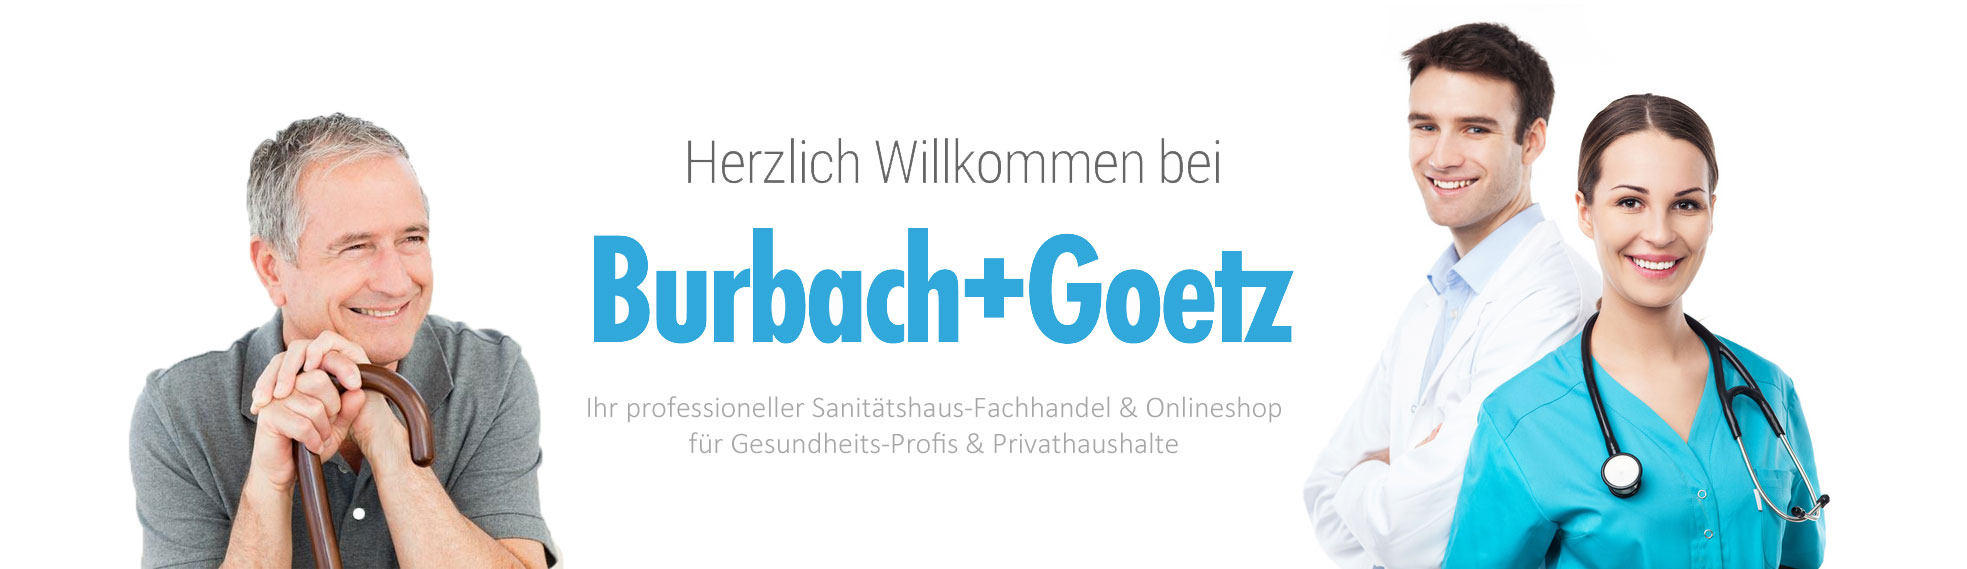 Sanitätshaus Onlineshop + Sanitäts-Fachhandel Burbach+Goetz in Koblenz www.burbach-goetz.de